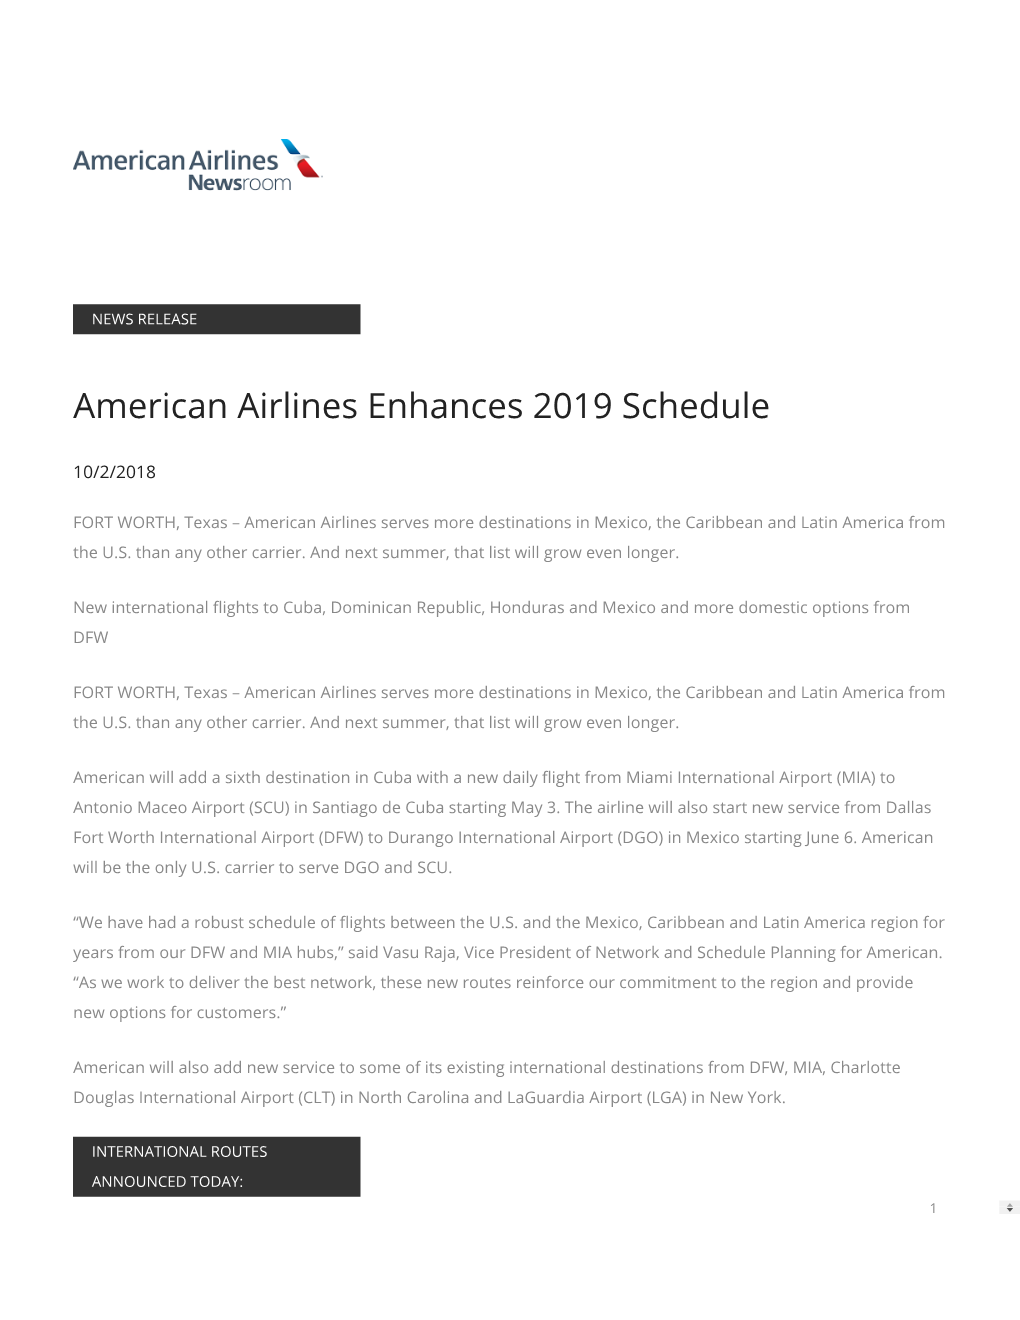 American Airlines Enhances 2019 Schedule